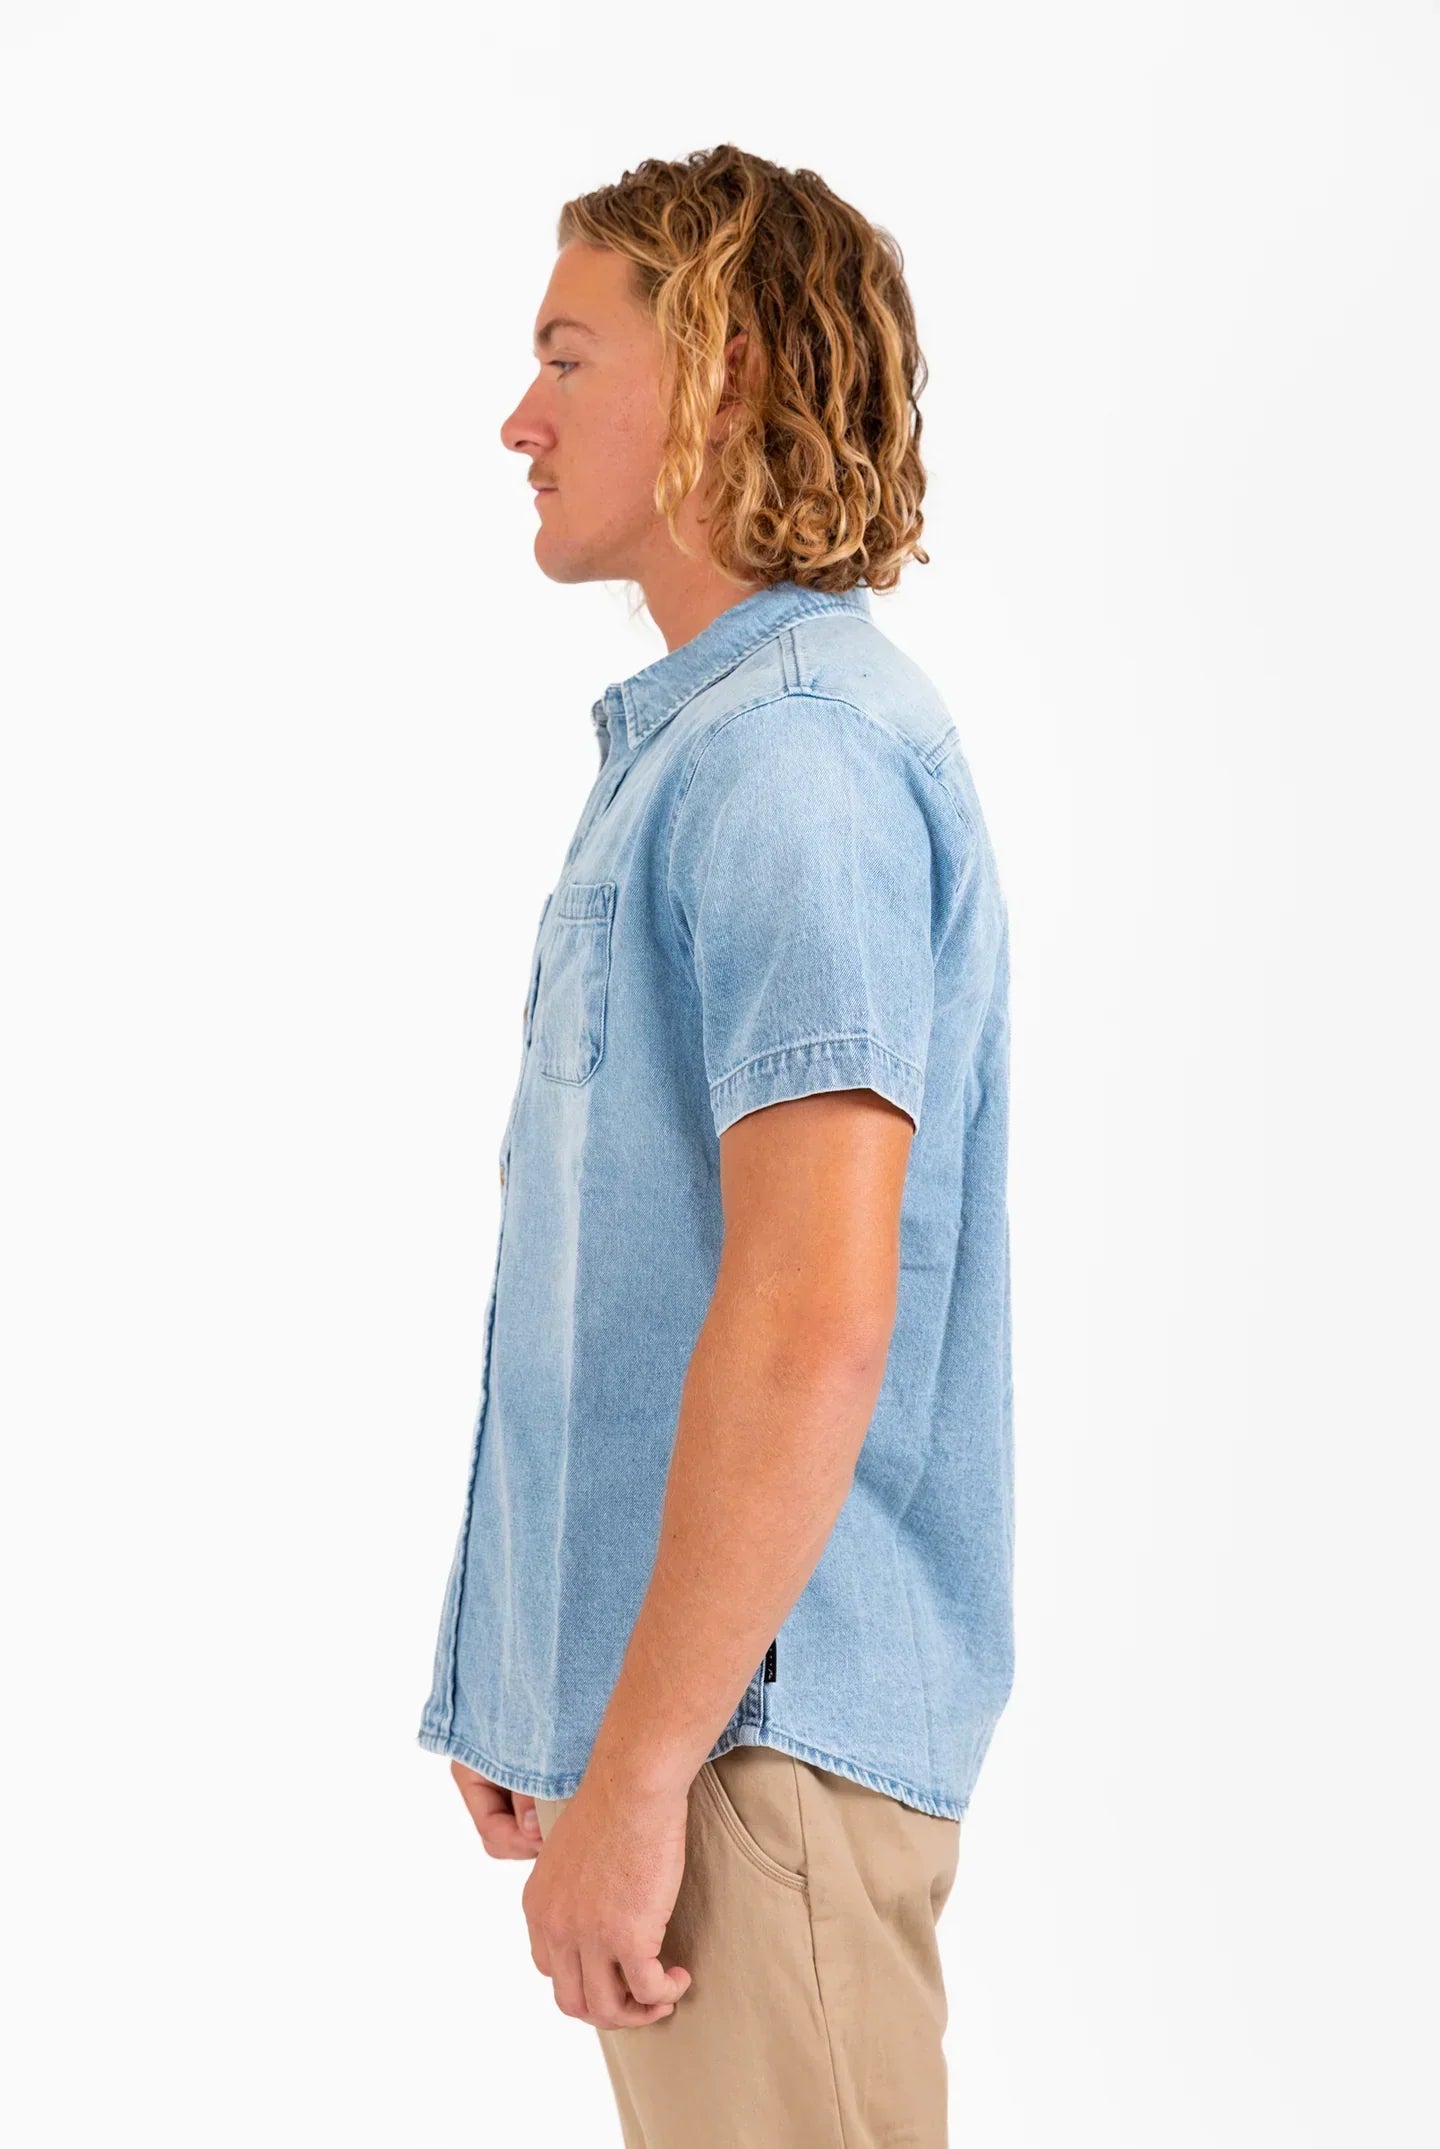 Duro Short Sleeve Denim Button Up Shirt - SoHa Surf Shop